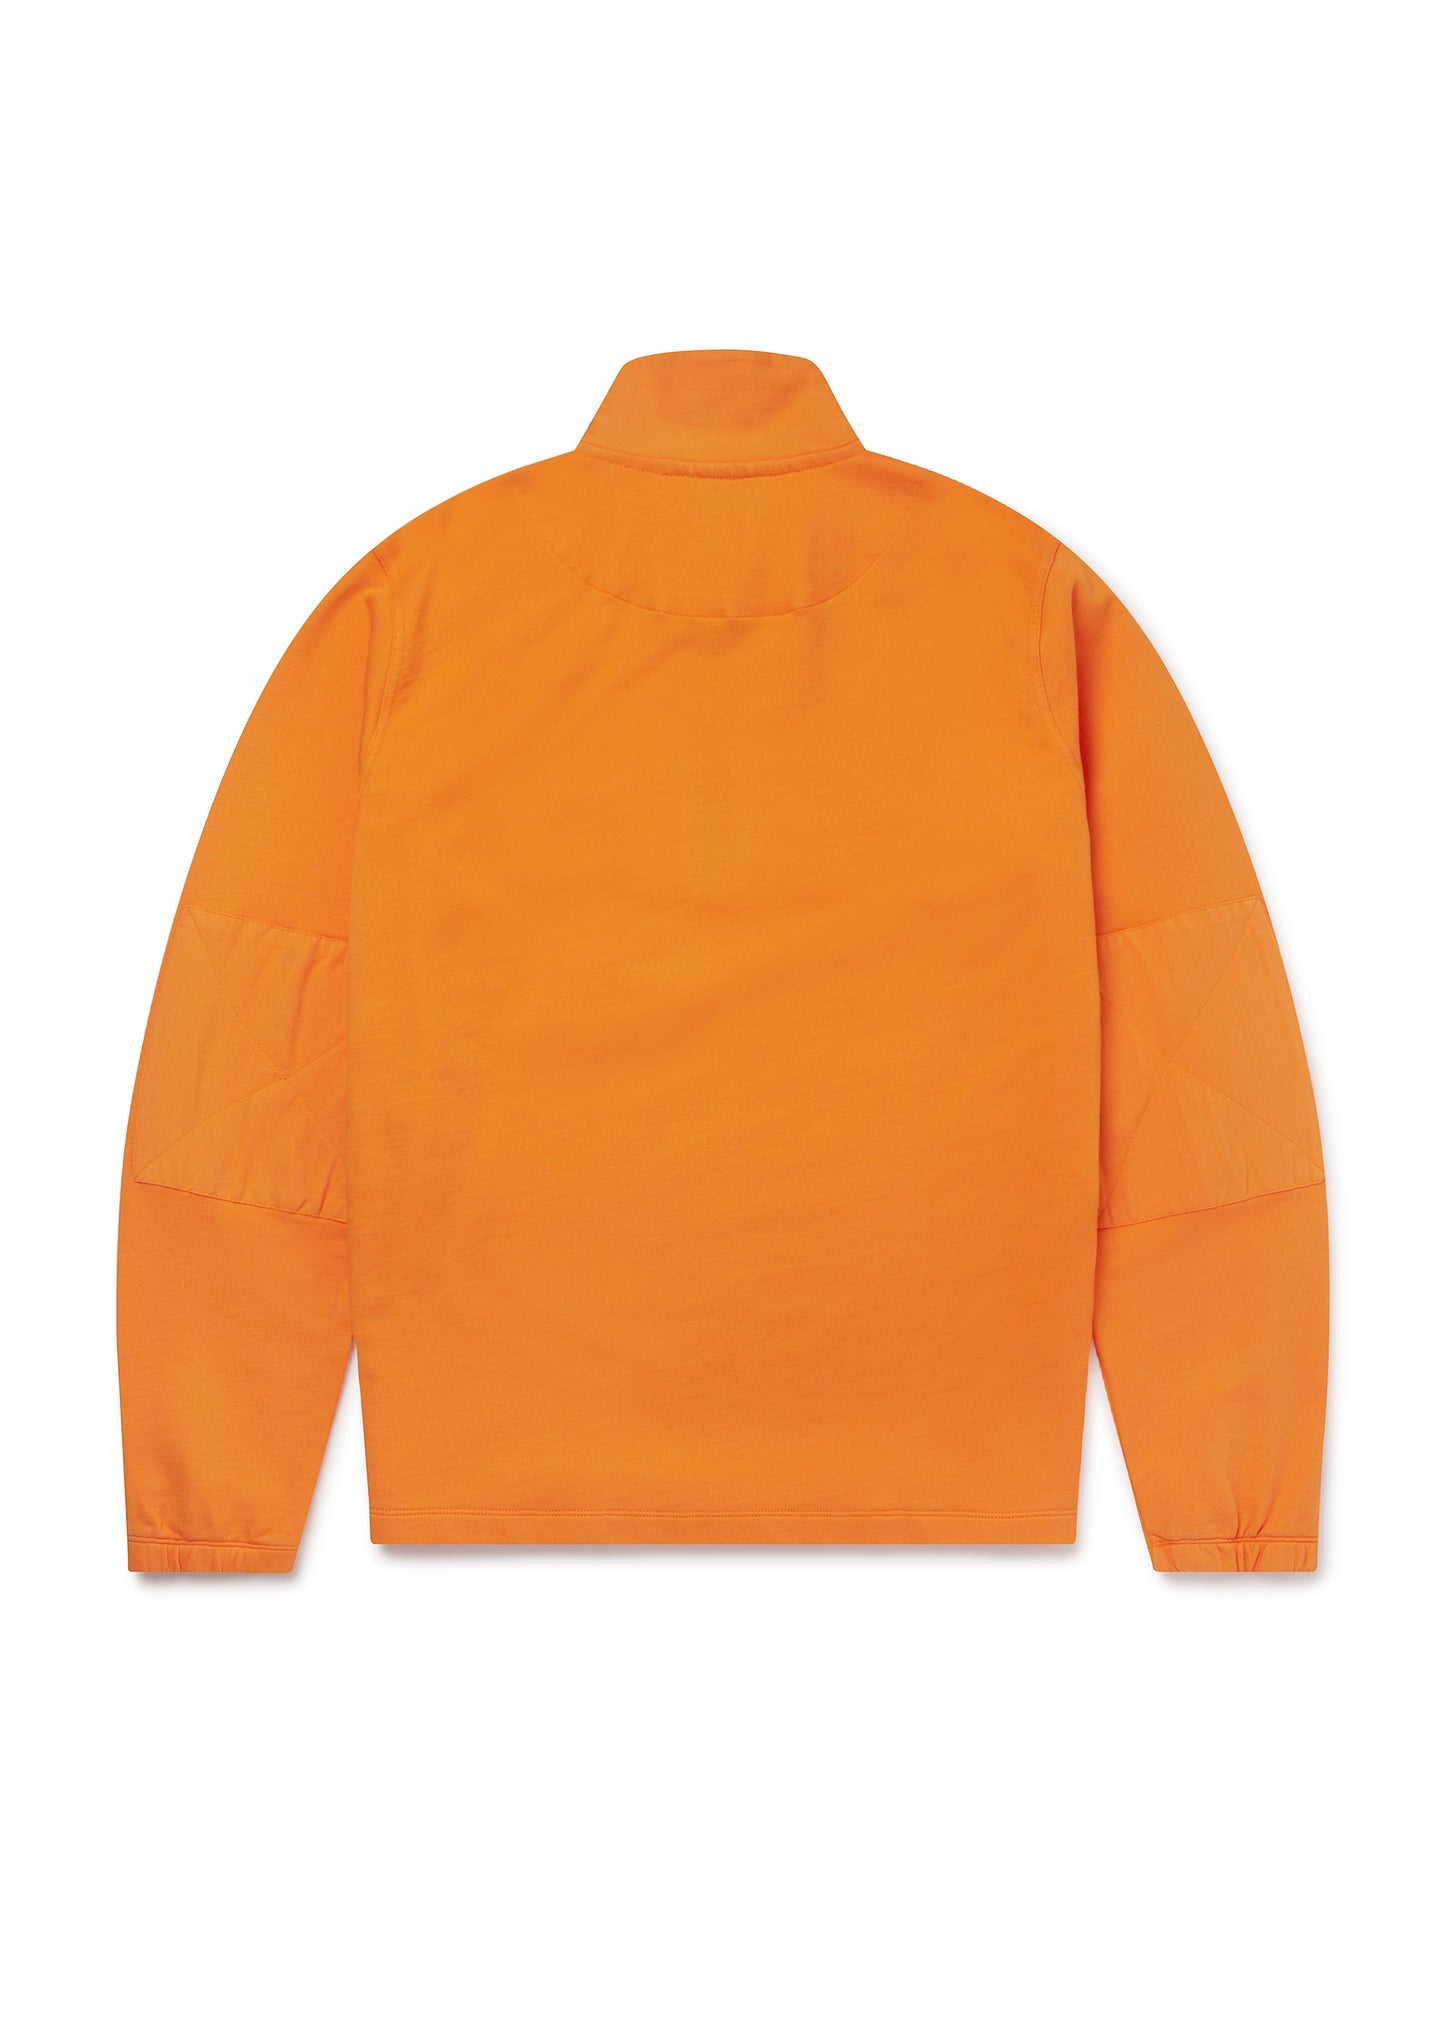 Tactical Sweatshirt in Bright Orange – albam Clothing